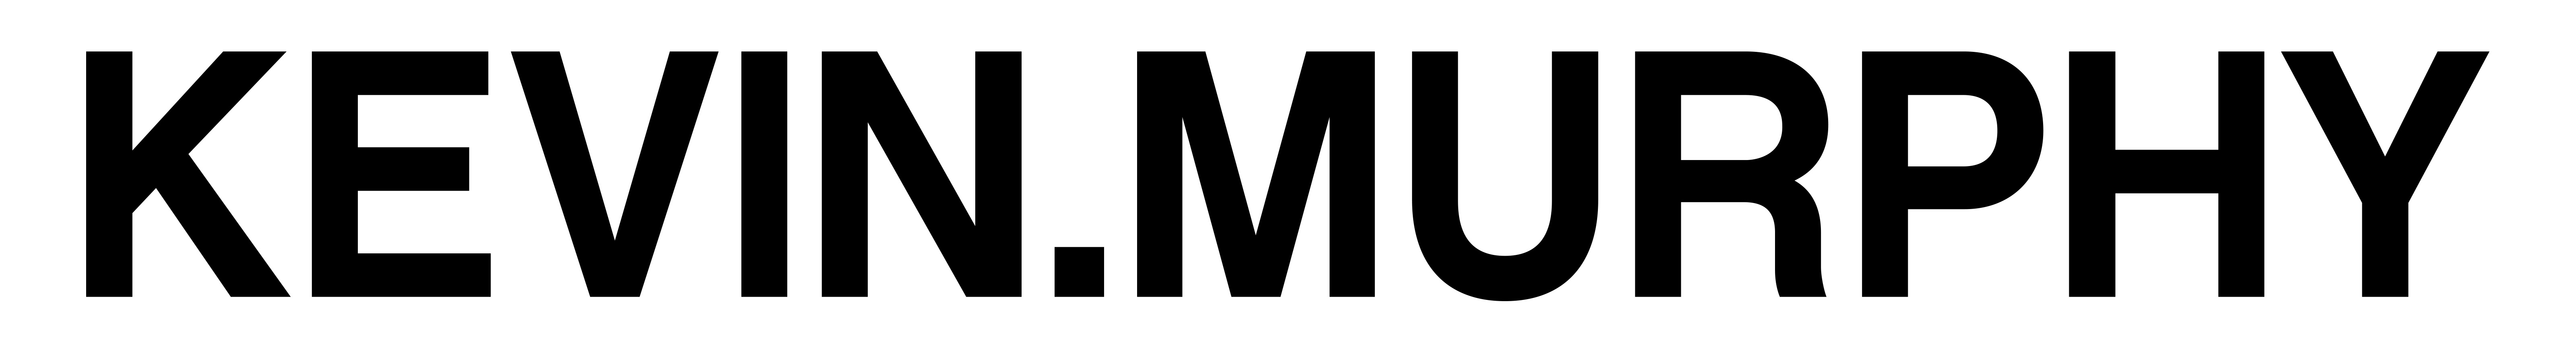 KM-logo-BLACK-4c.jpg